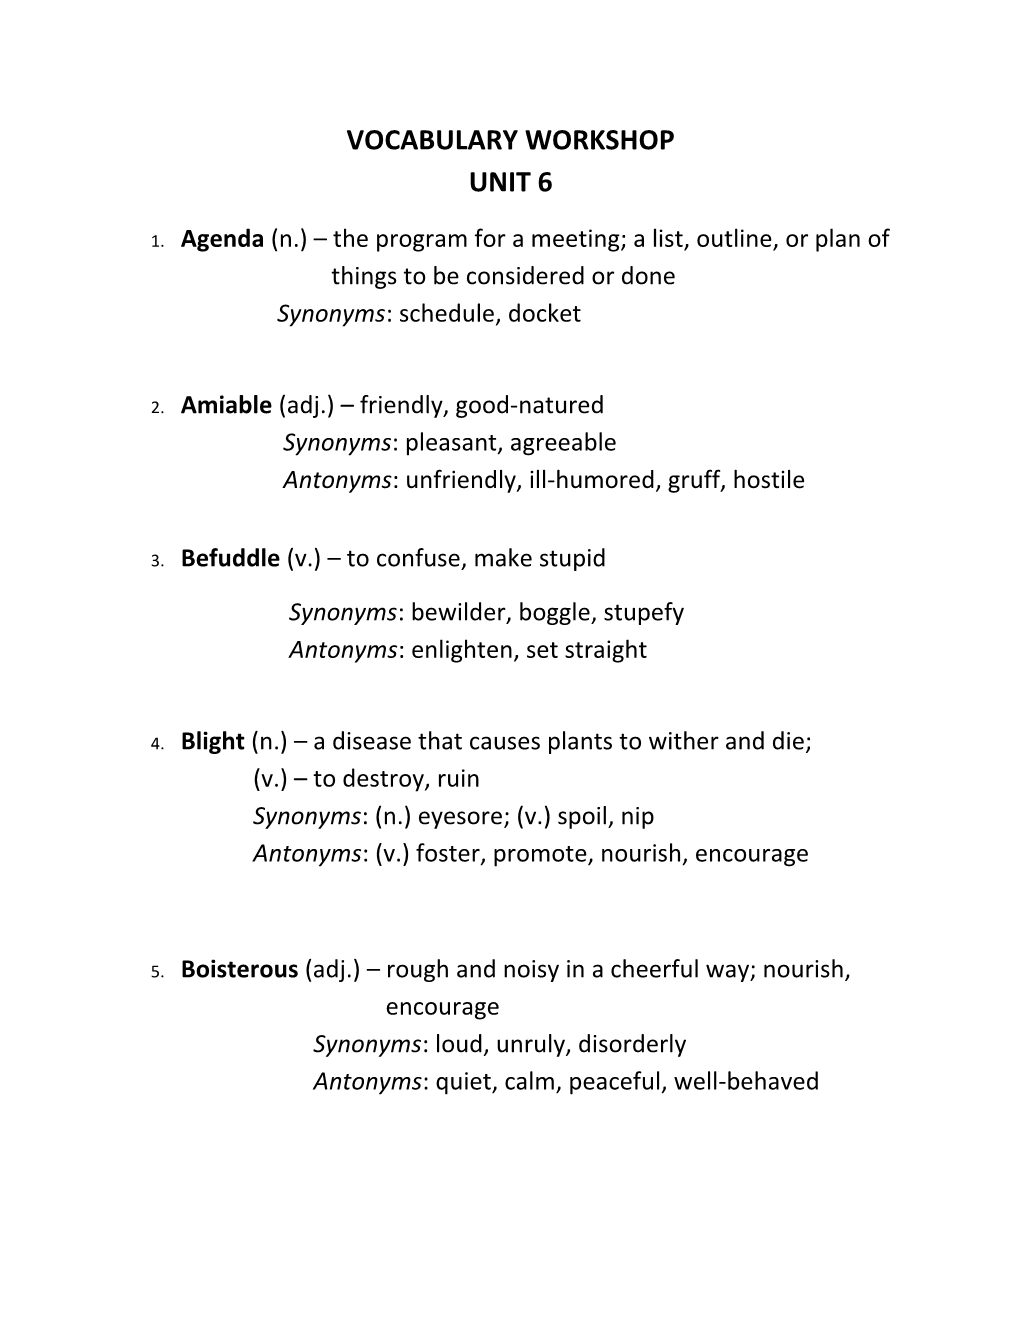 Vocabulary Workshop Unit 6